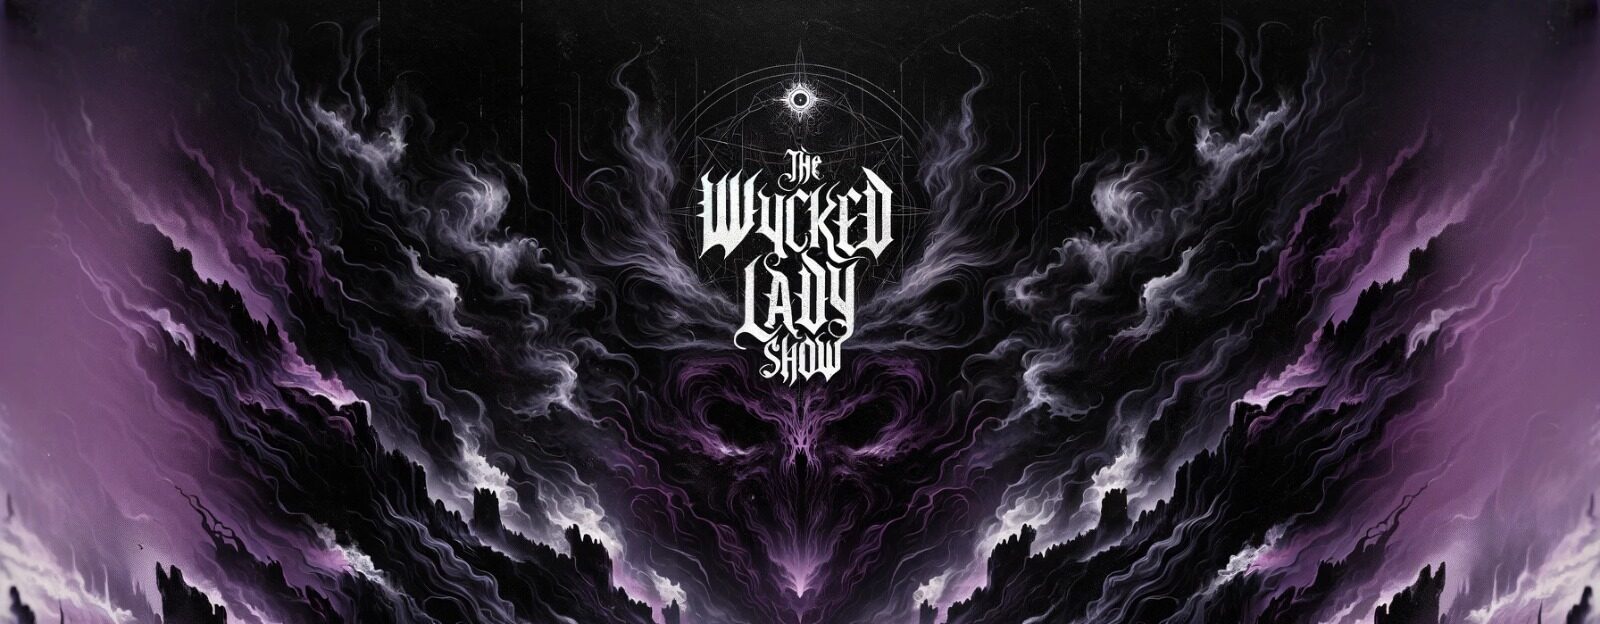 The Wycked Lady Show